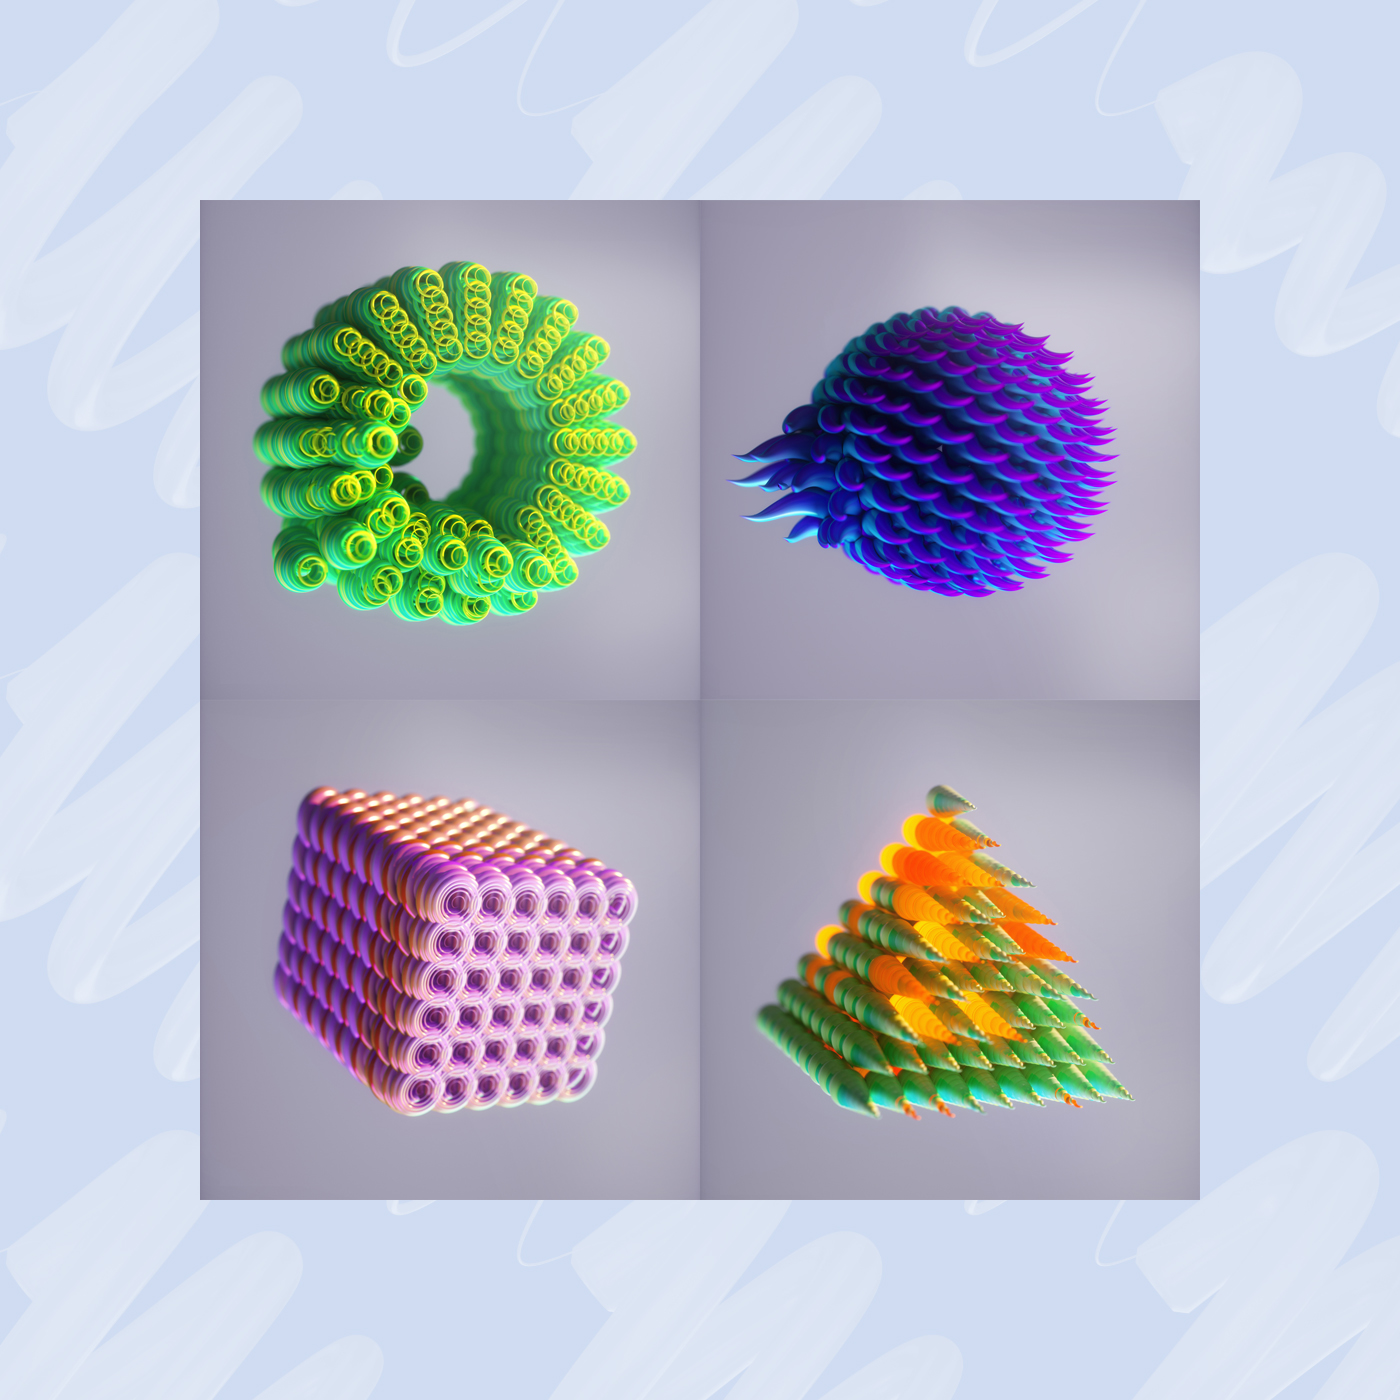 Procedural parametric geometry 3D c4d octane cube sphere Spiral abstract